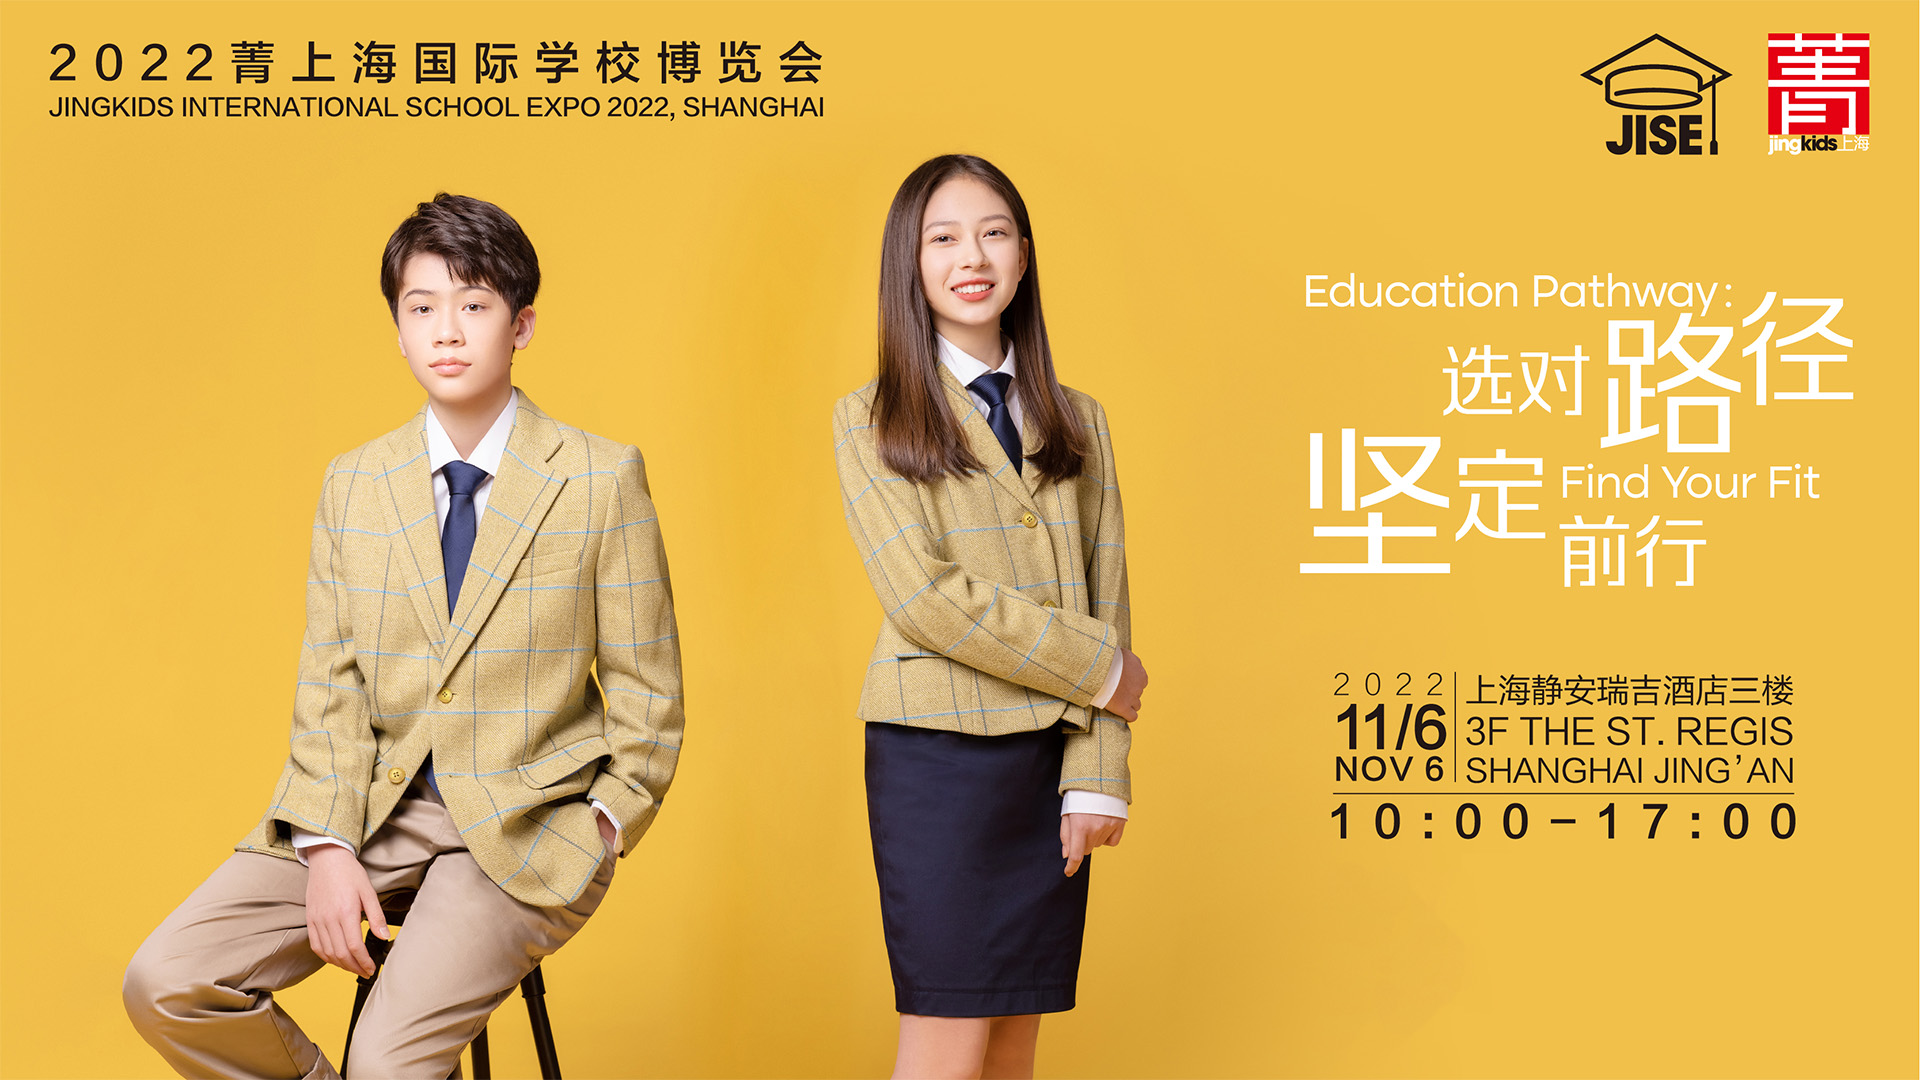 Jingkids International School Expo 2022, Shanghai